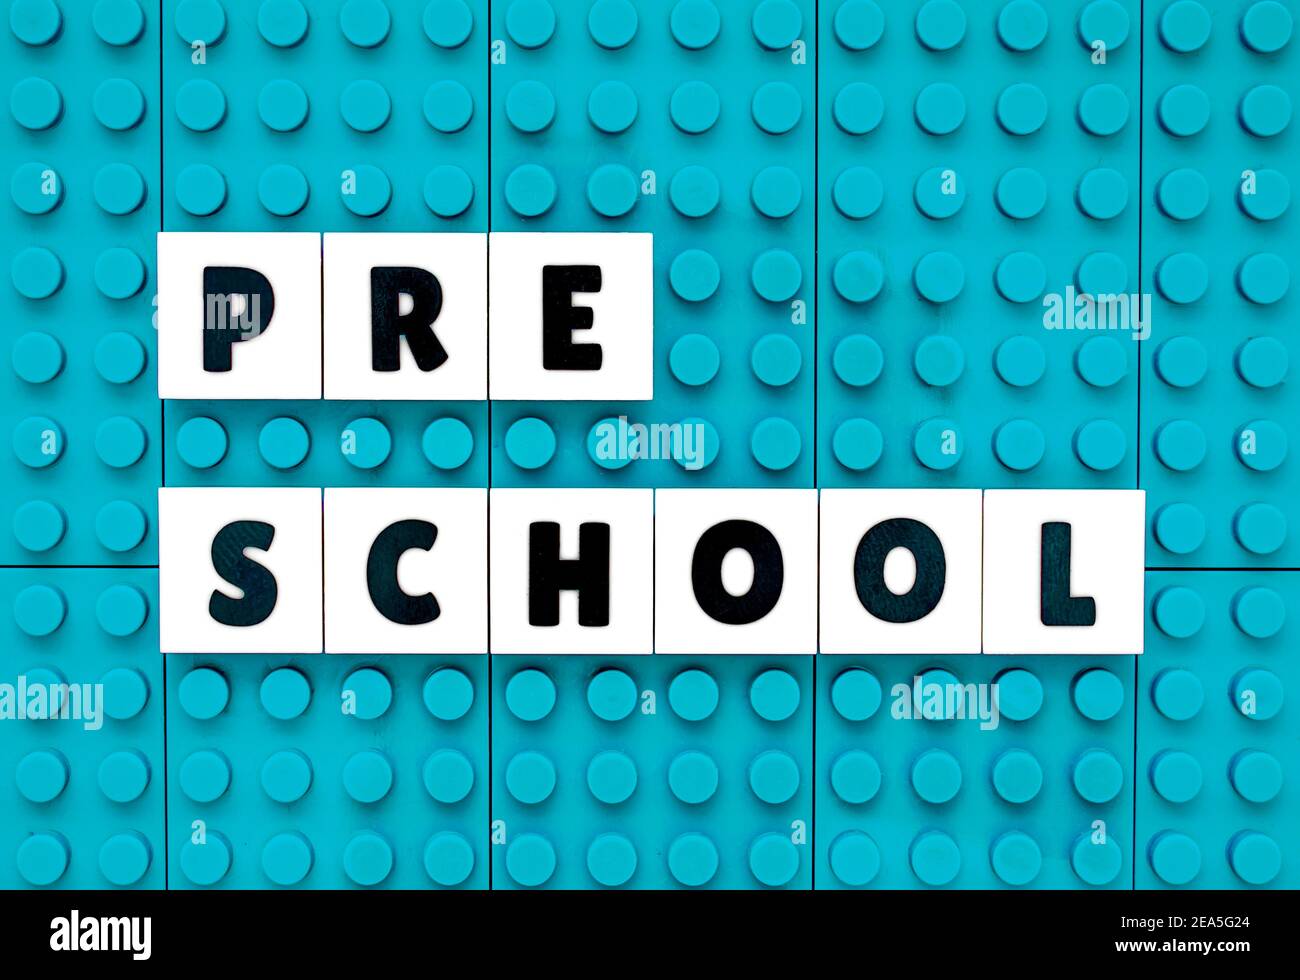 Pre-School sign text build with interlocking plastic white and sky blue bricks Stock Photo